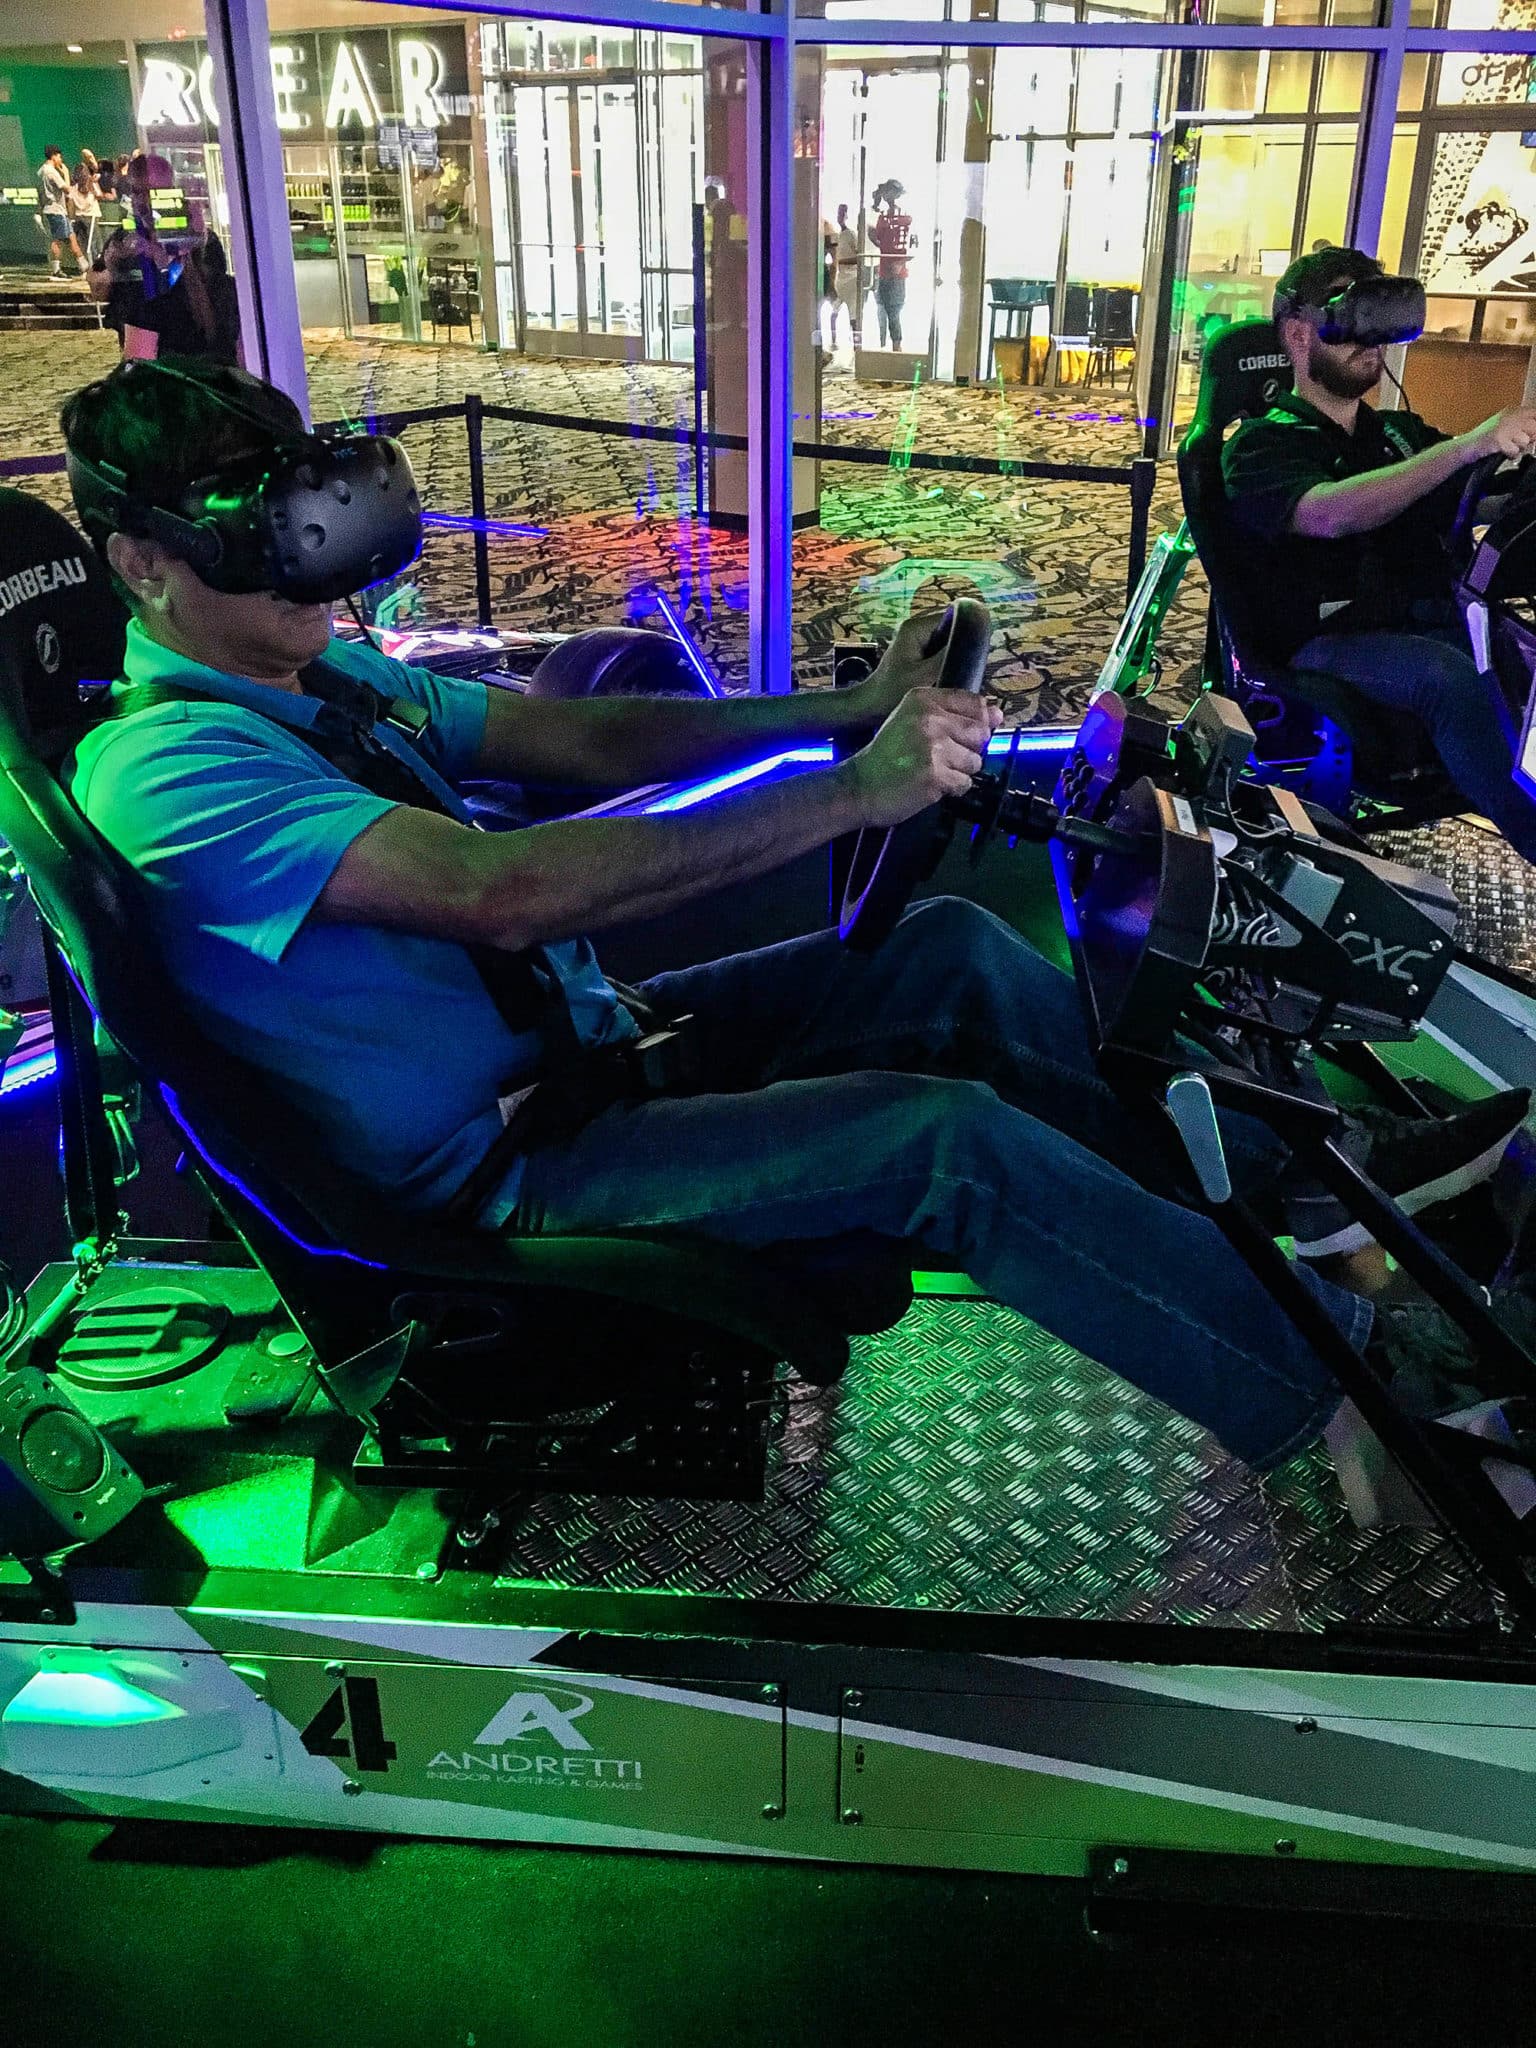 Andretti’s Pro Racing Simulators is real